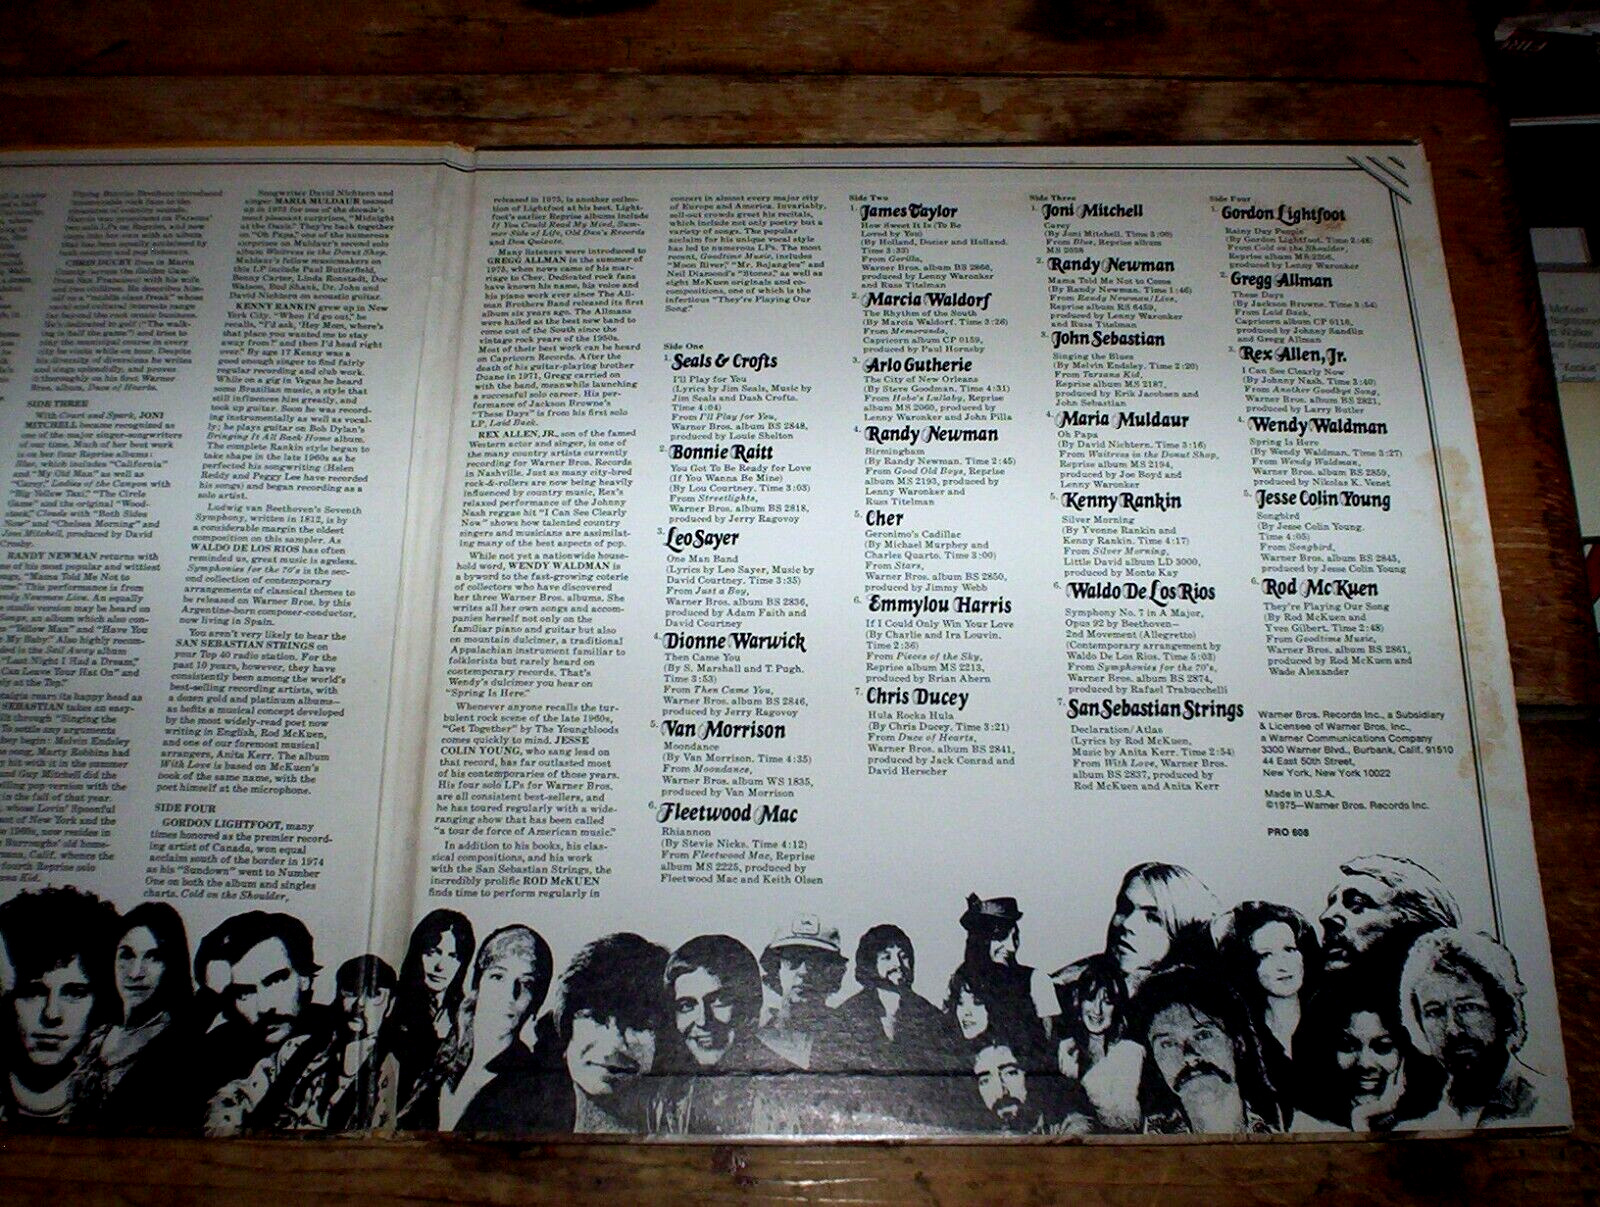 WB PROMO 2 LP w/ Cher JAMES TAYLOR Bonnie Raitt JONI MITCHELL Fleetwood Mac NM-